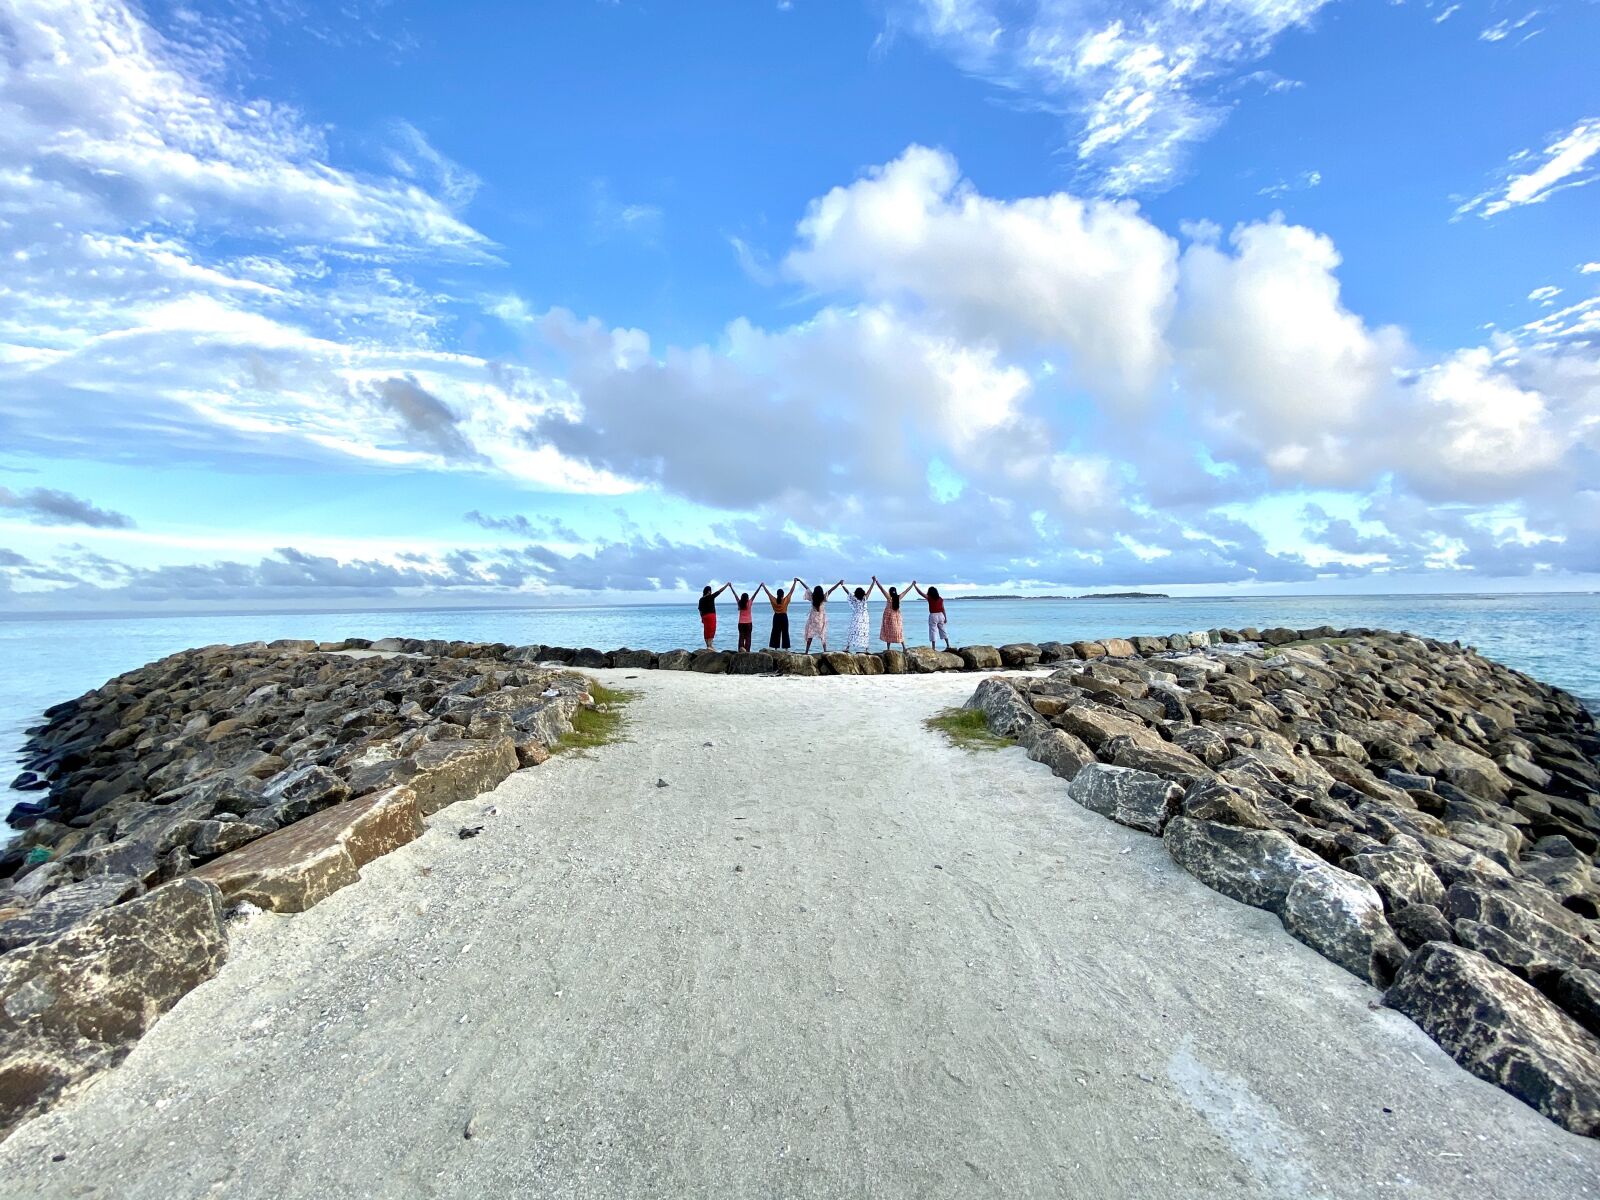 iPhone 11 back dual wide camera 1.54mm f/2.4 sample photo. Maldives, island, travel photography